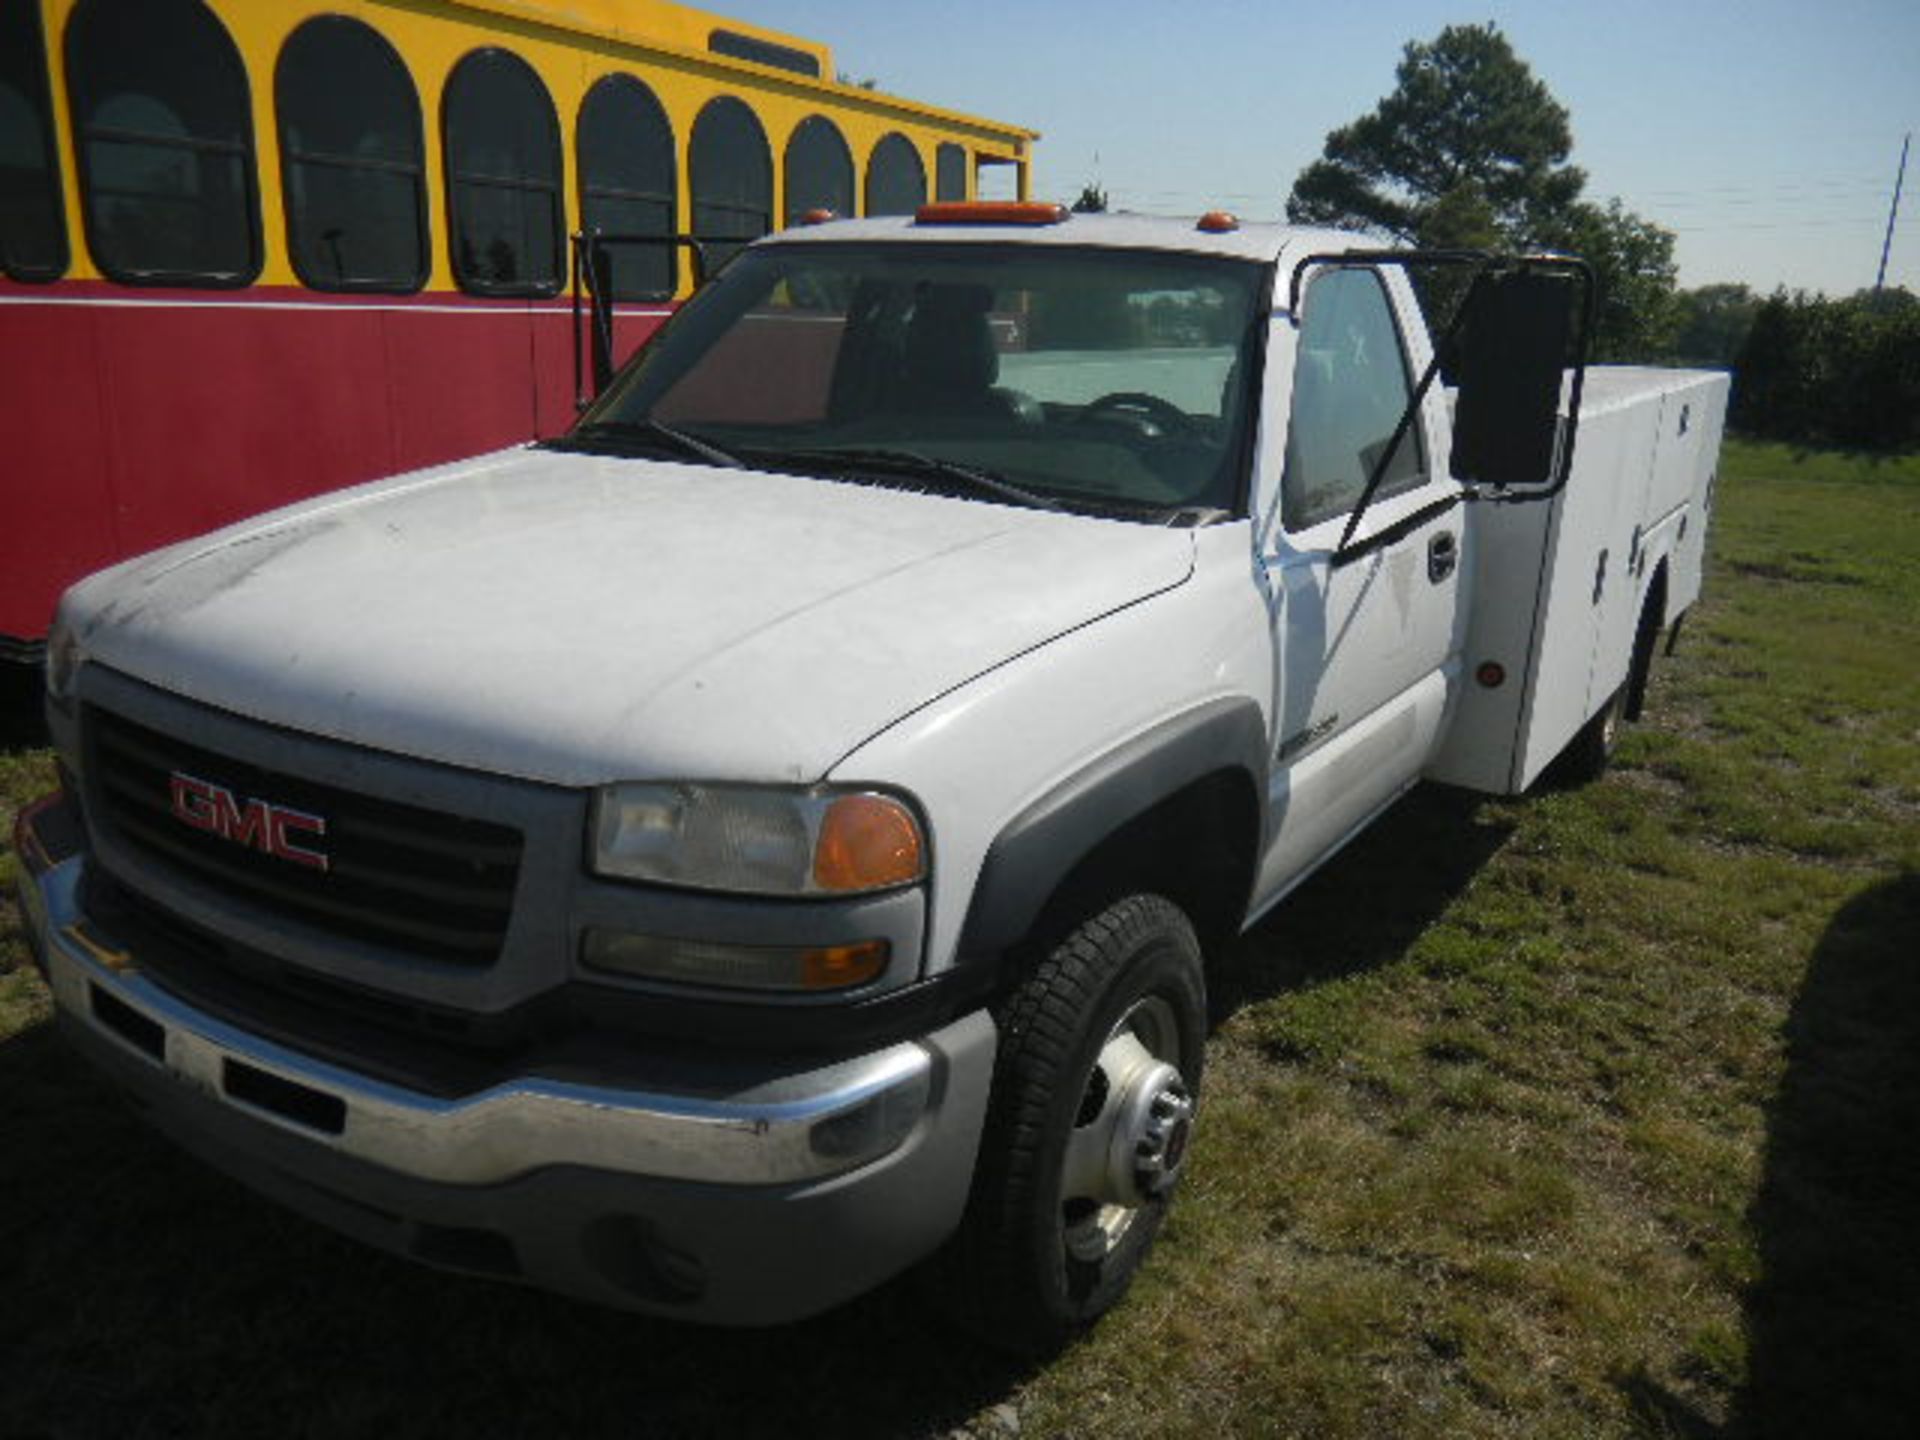 2006 GMC Sierra 1 Ton Service Truck - Asset I.D. #972 - Last of Vin (274597) - Image 2 of 8